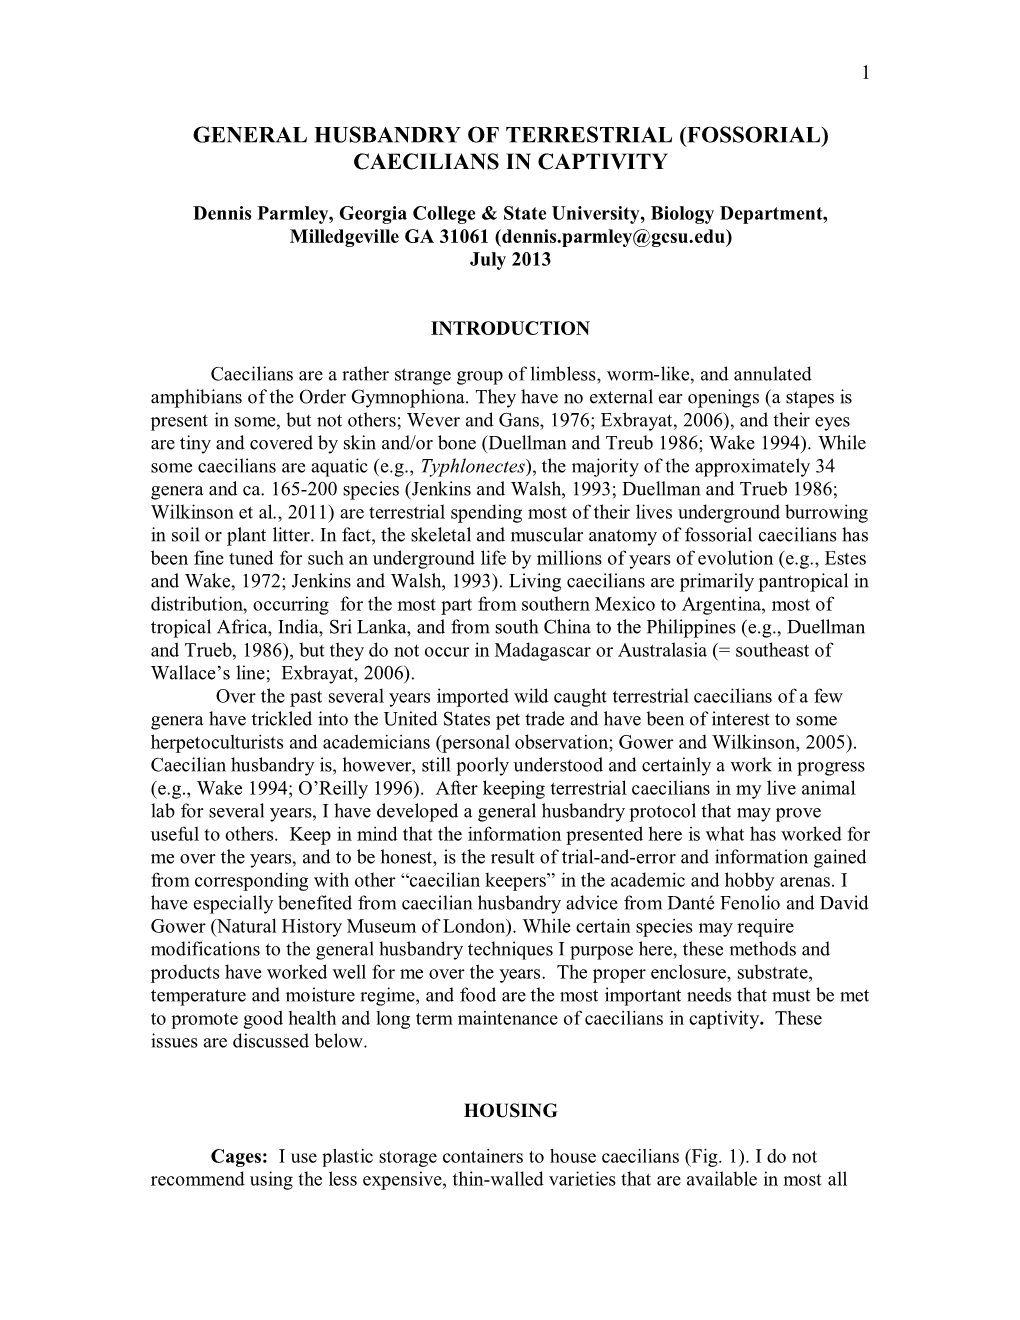 General Husbandry of Terrestrial (Fossorial) Caecilians in Captivity